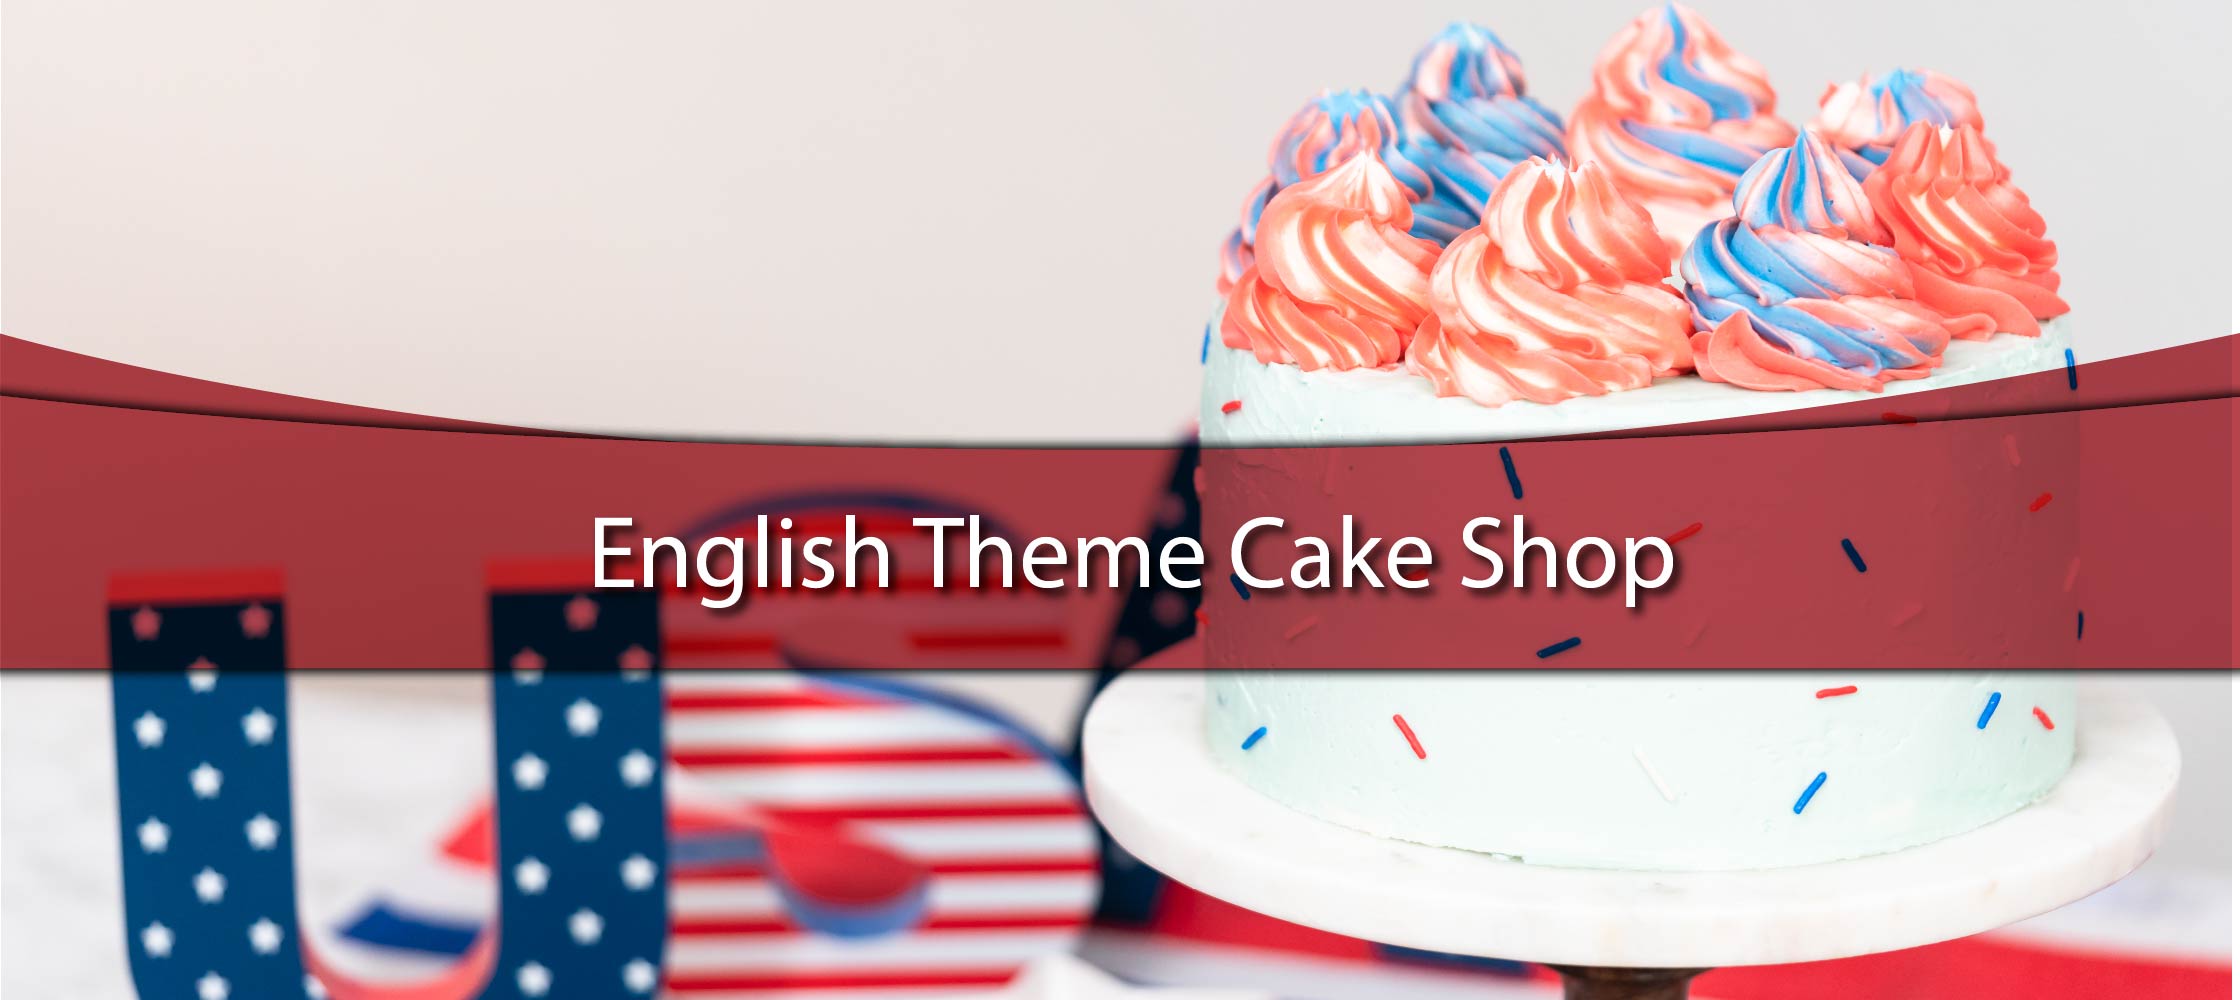 English theme cake shops